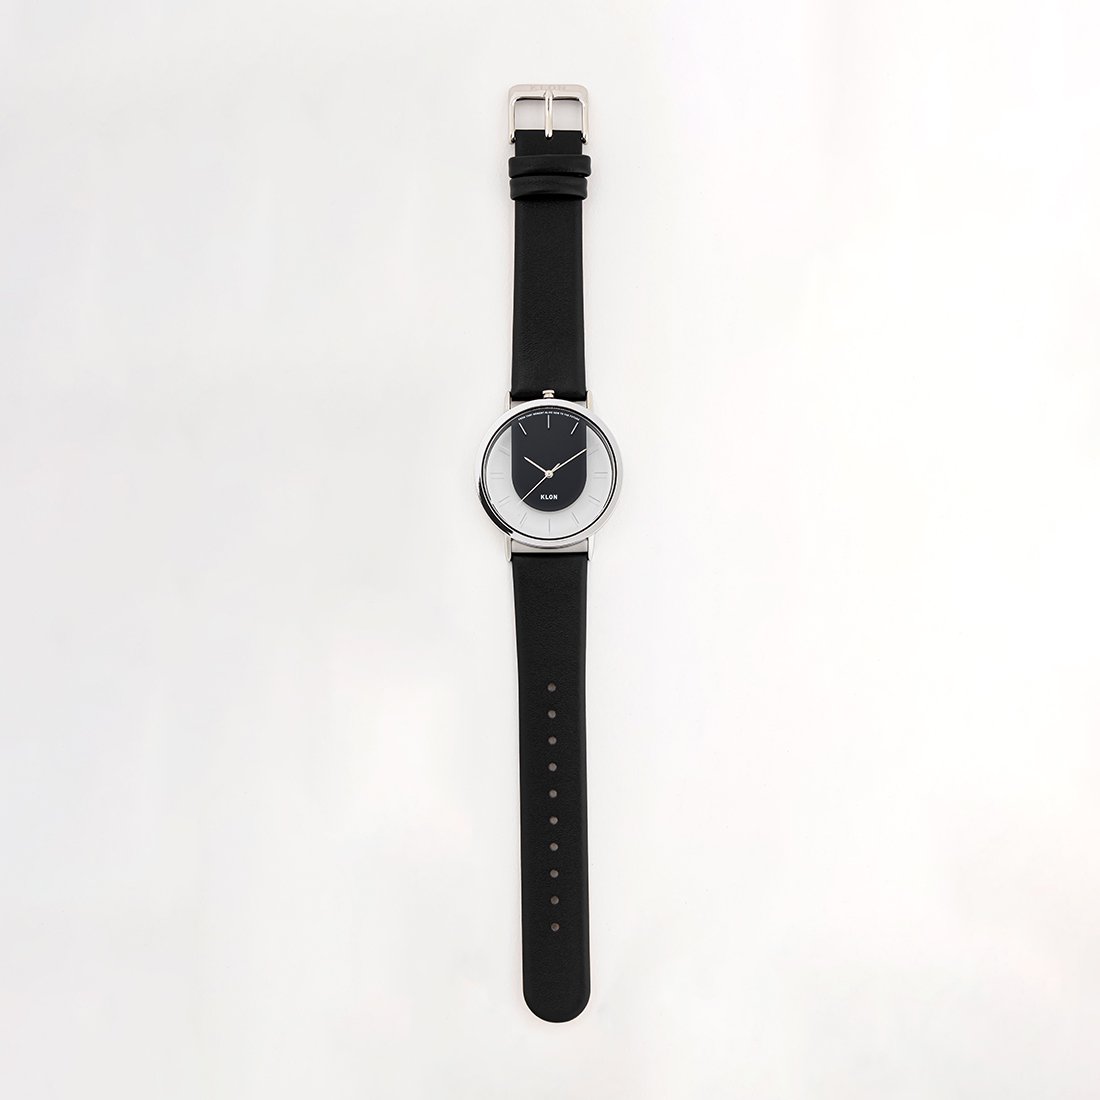 KLON INVISIBLE RELATION BLACK 40mm カジュアル 腕時計